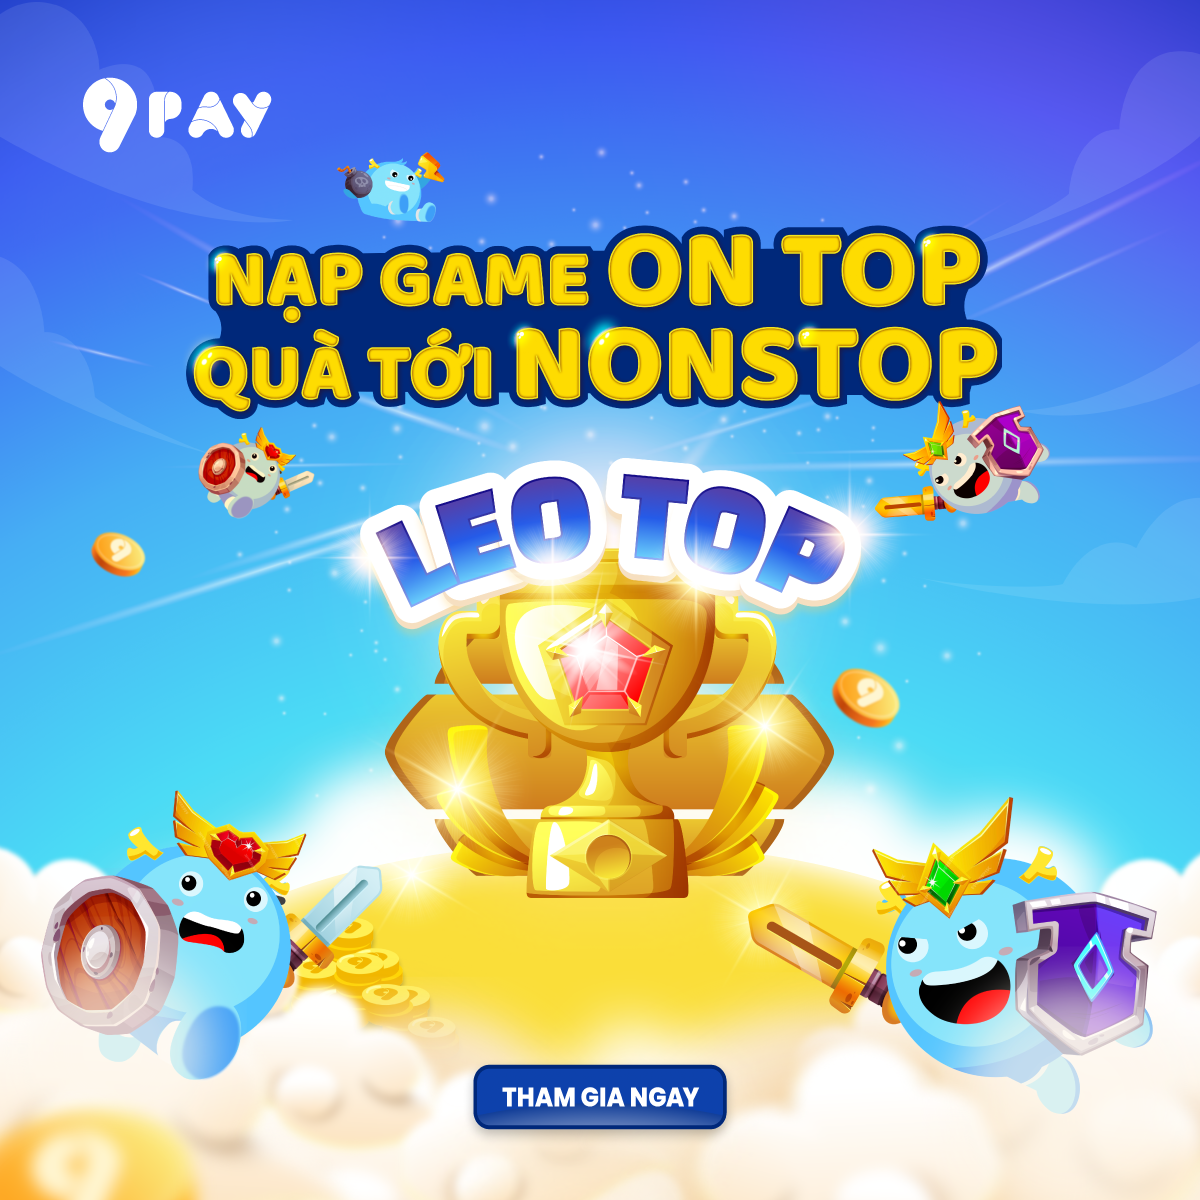 DB4v-nap-game-on-top-chinh-phuc-tong-qua-thuong-toi-22-trieu-dong